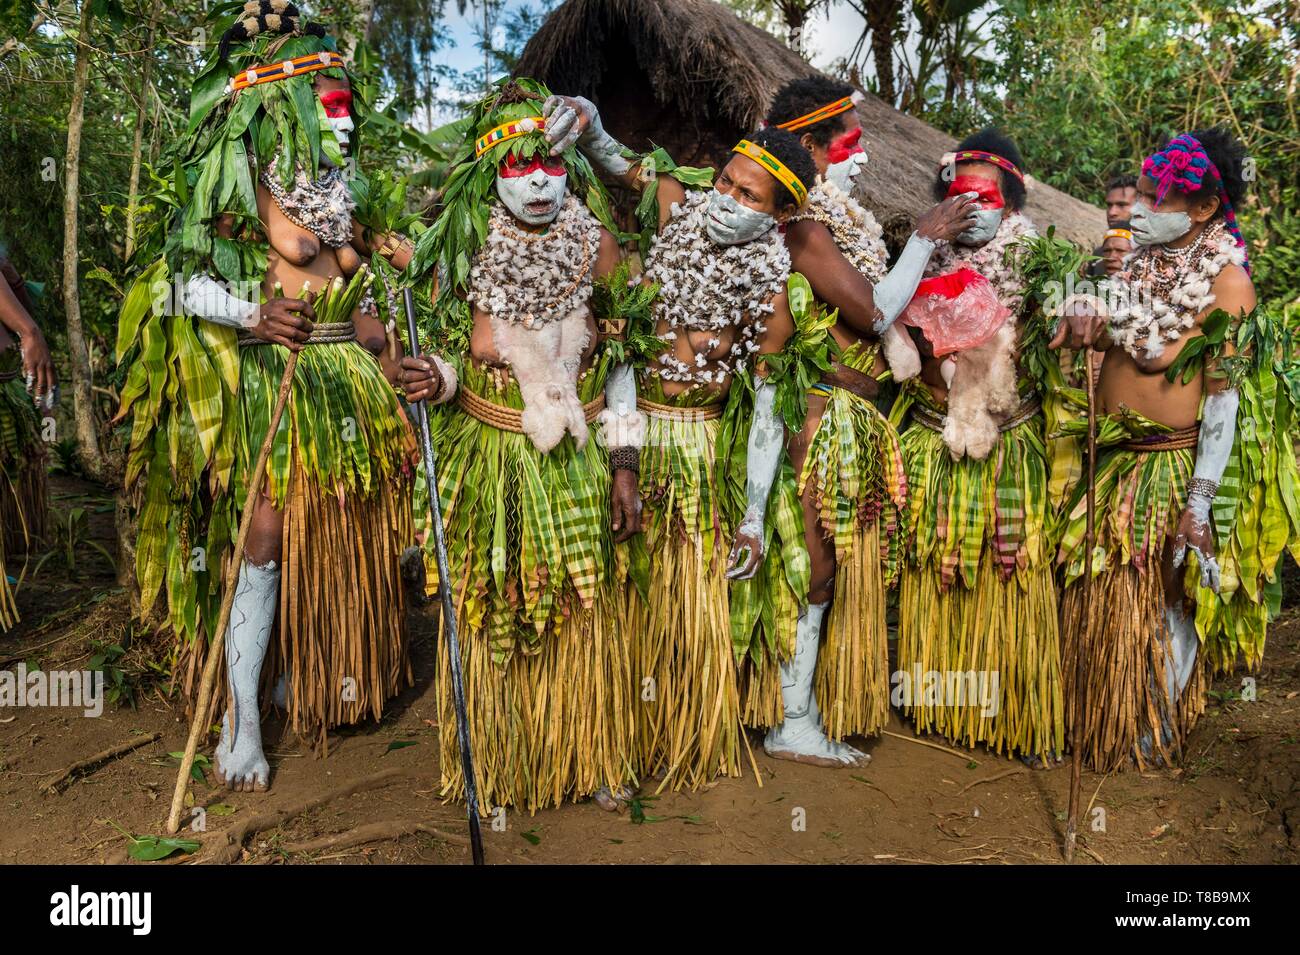 Papua New Guinea, Western Highlands Province, Wahgi Valley, Mount Hagen Region, festival of Hagen Show, traditional sing sing group women Stock Photo